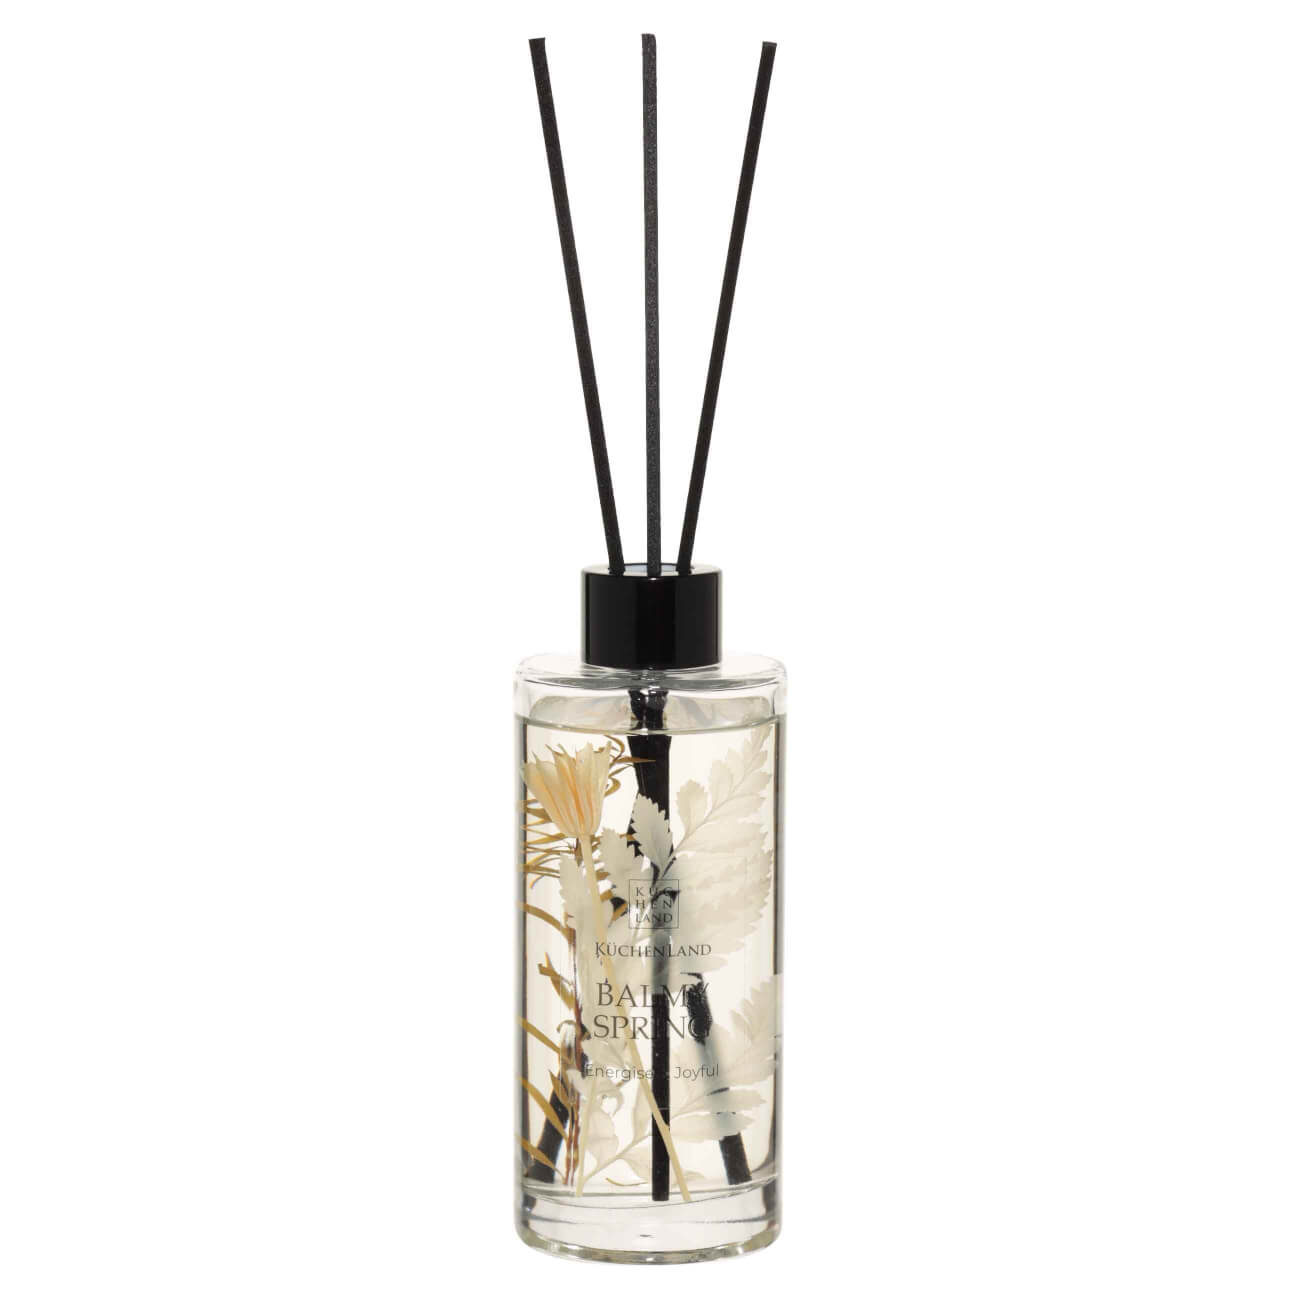 Perfume diffuser, 180 ml, with dried flowers, Energise&Joyful, Balmy spring изображение № 1